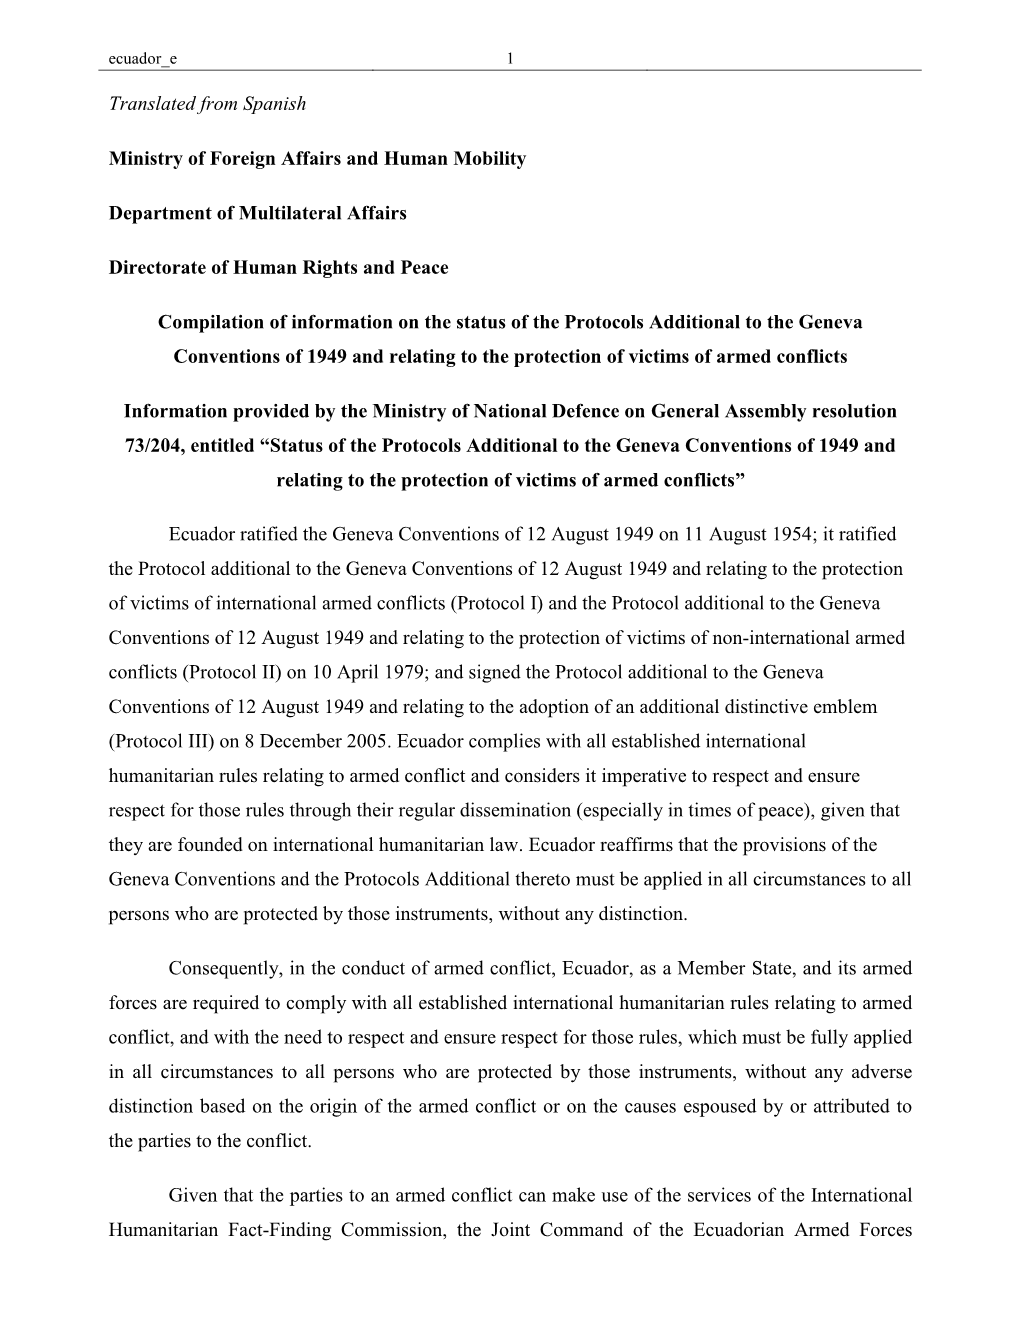 Ecuador -- Status of the Protocols Additional to the Geneva